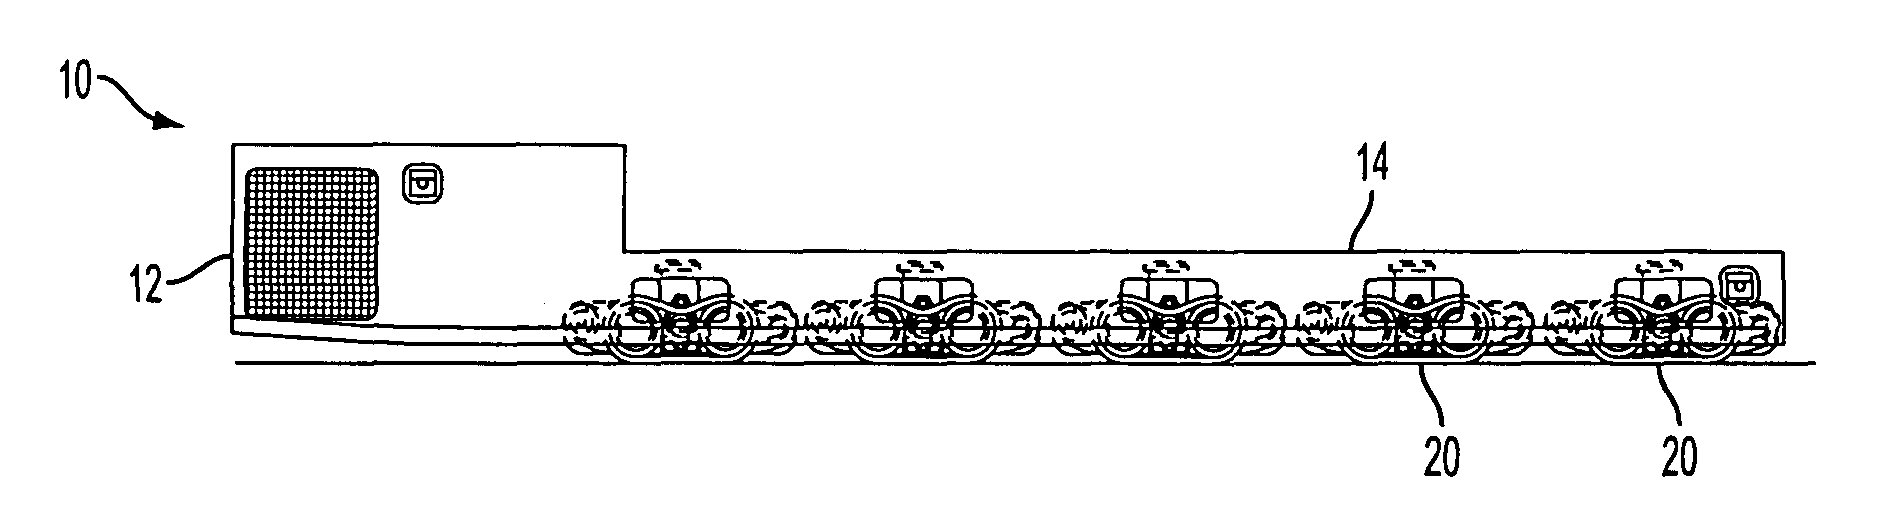 Heavy capacity transporter having multiple track-axles